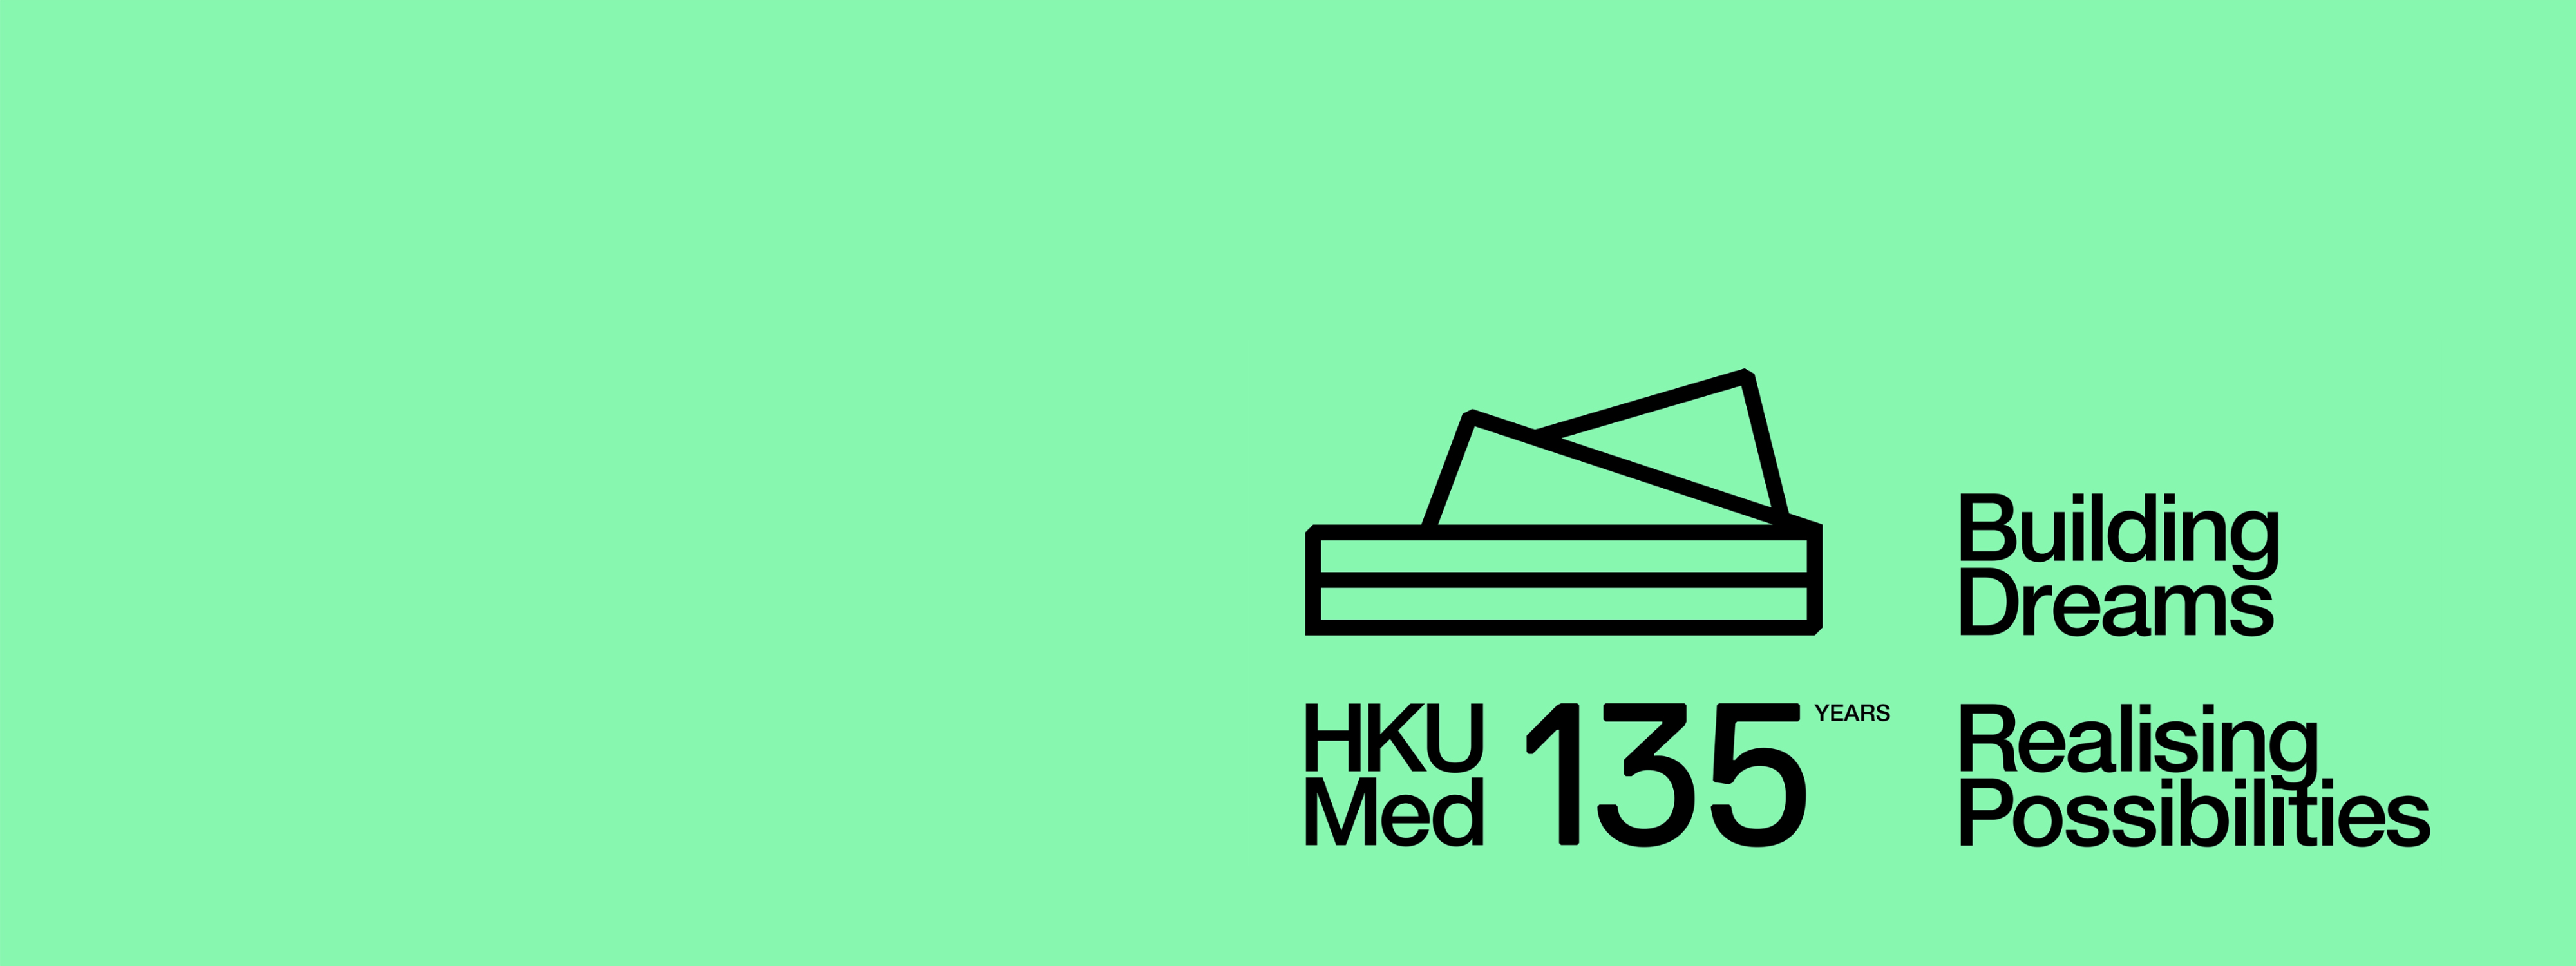 HKUMed 135 Campaign Visual